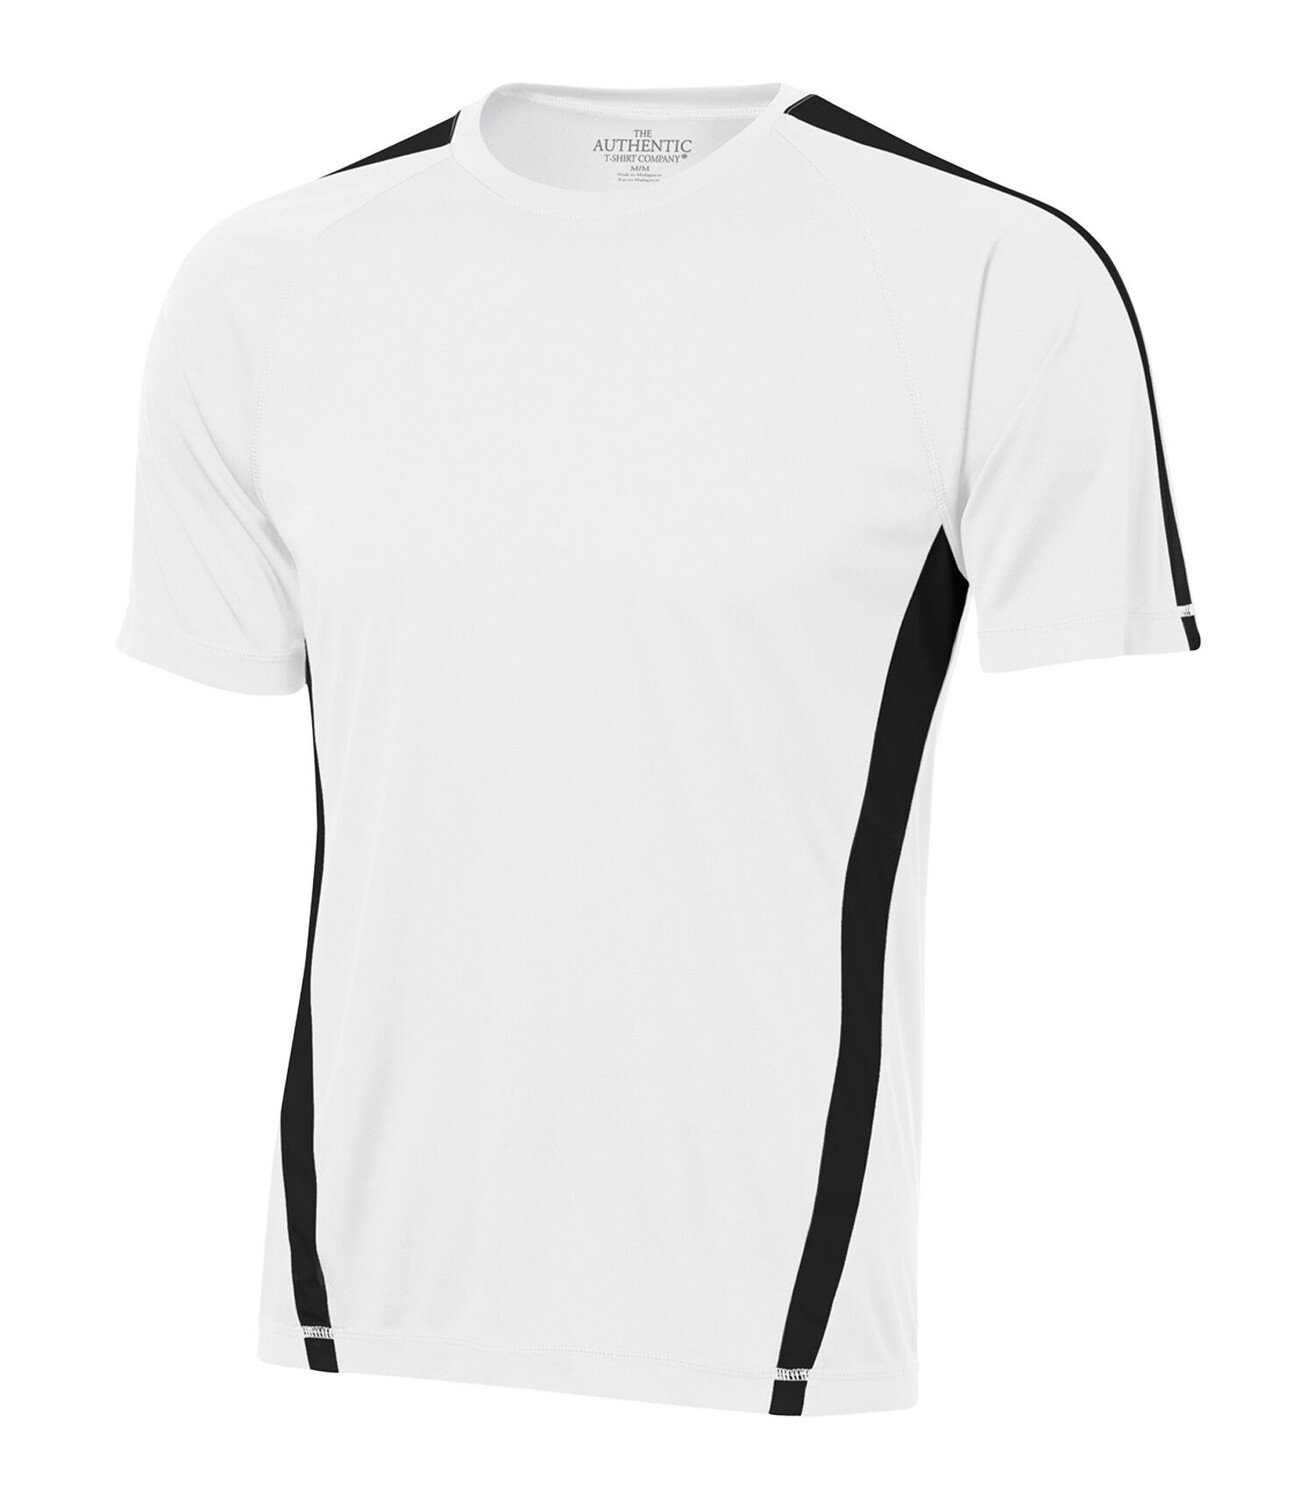 ATC Pro Team Home &amp; Away Jersey, Size: XS, Colour: White/Black